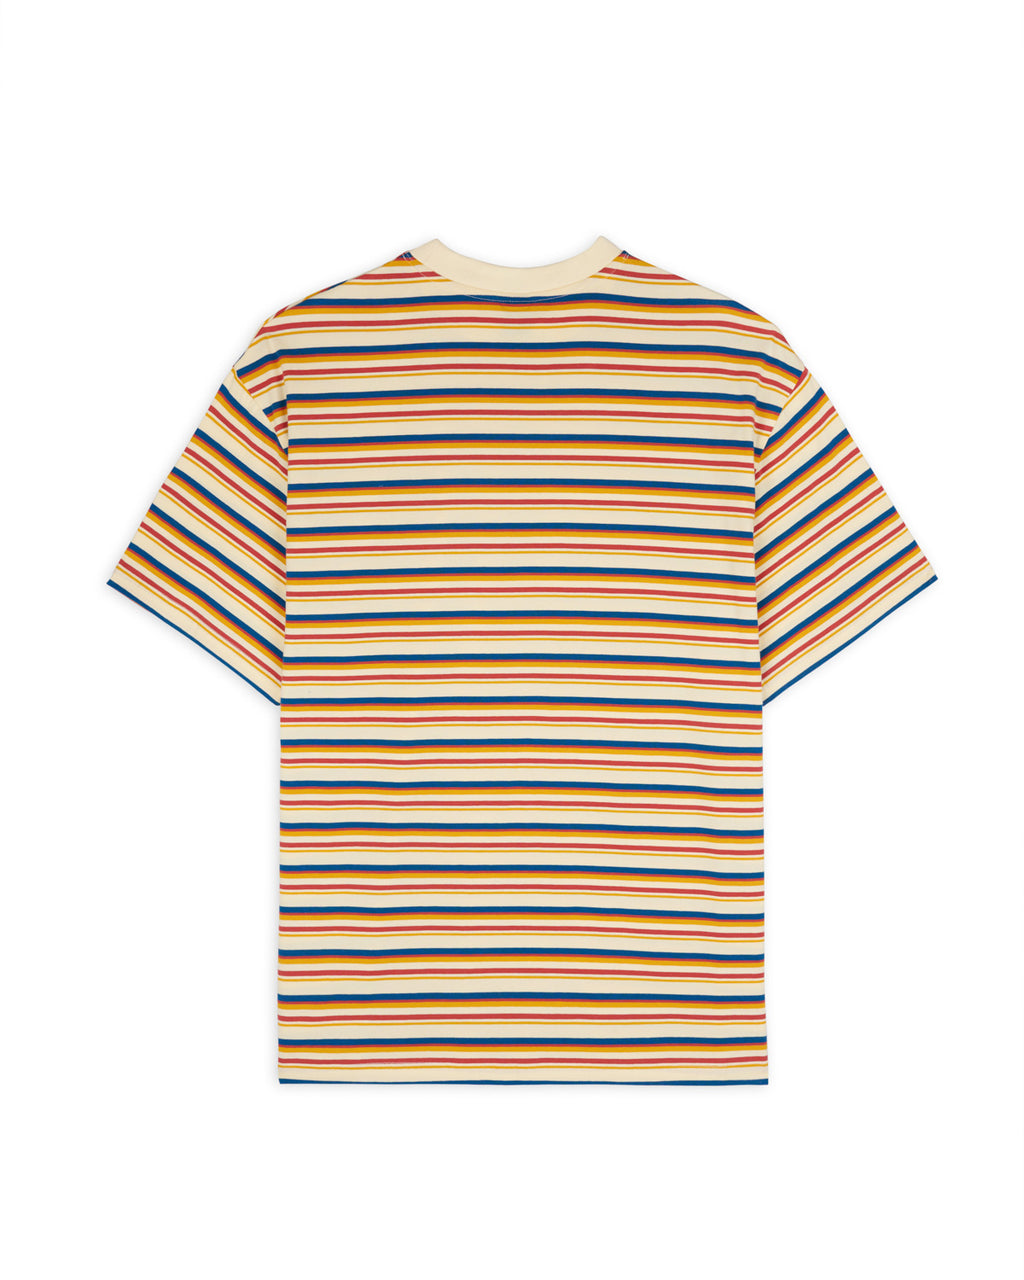 Nineties Blocked Striped T-Shirt - Cream 2